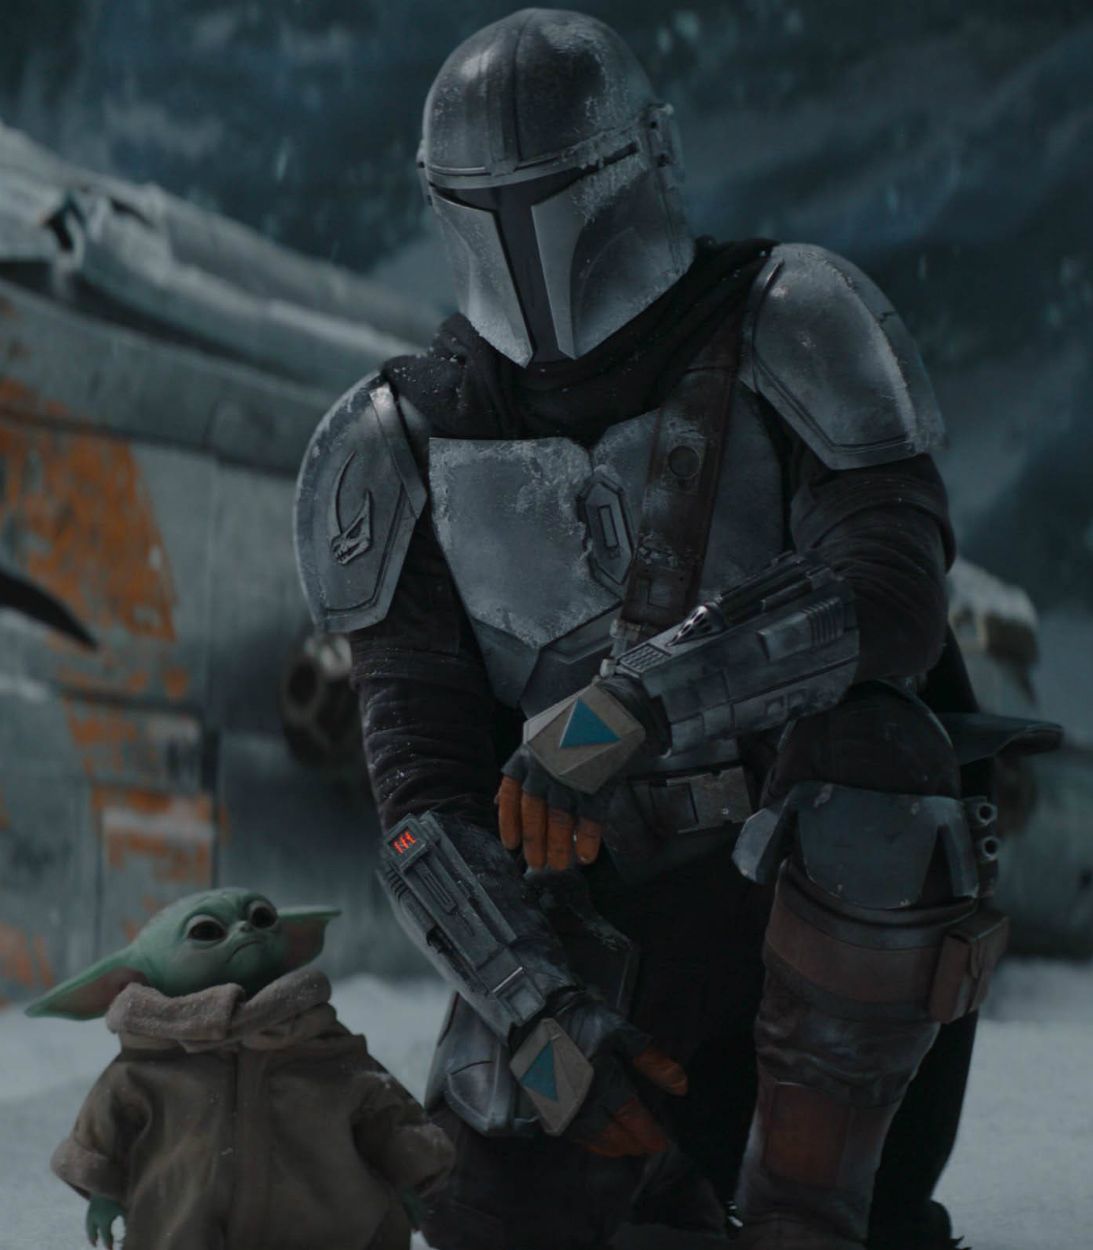 Pedro Pascal as Din Djarin with Baby Yoda in The Mandalorian Season 2 Vertical